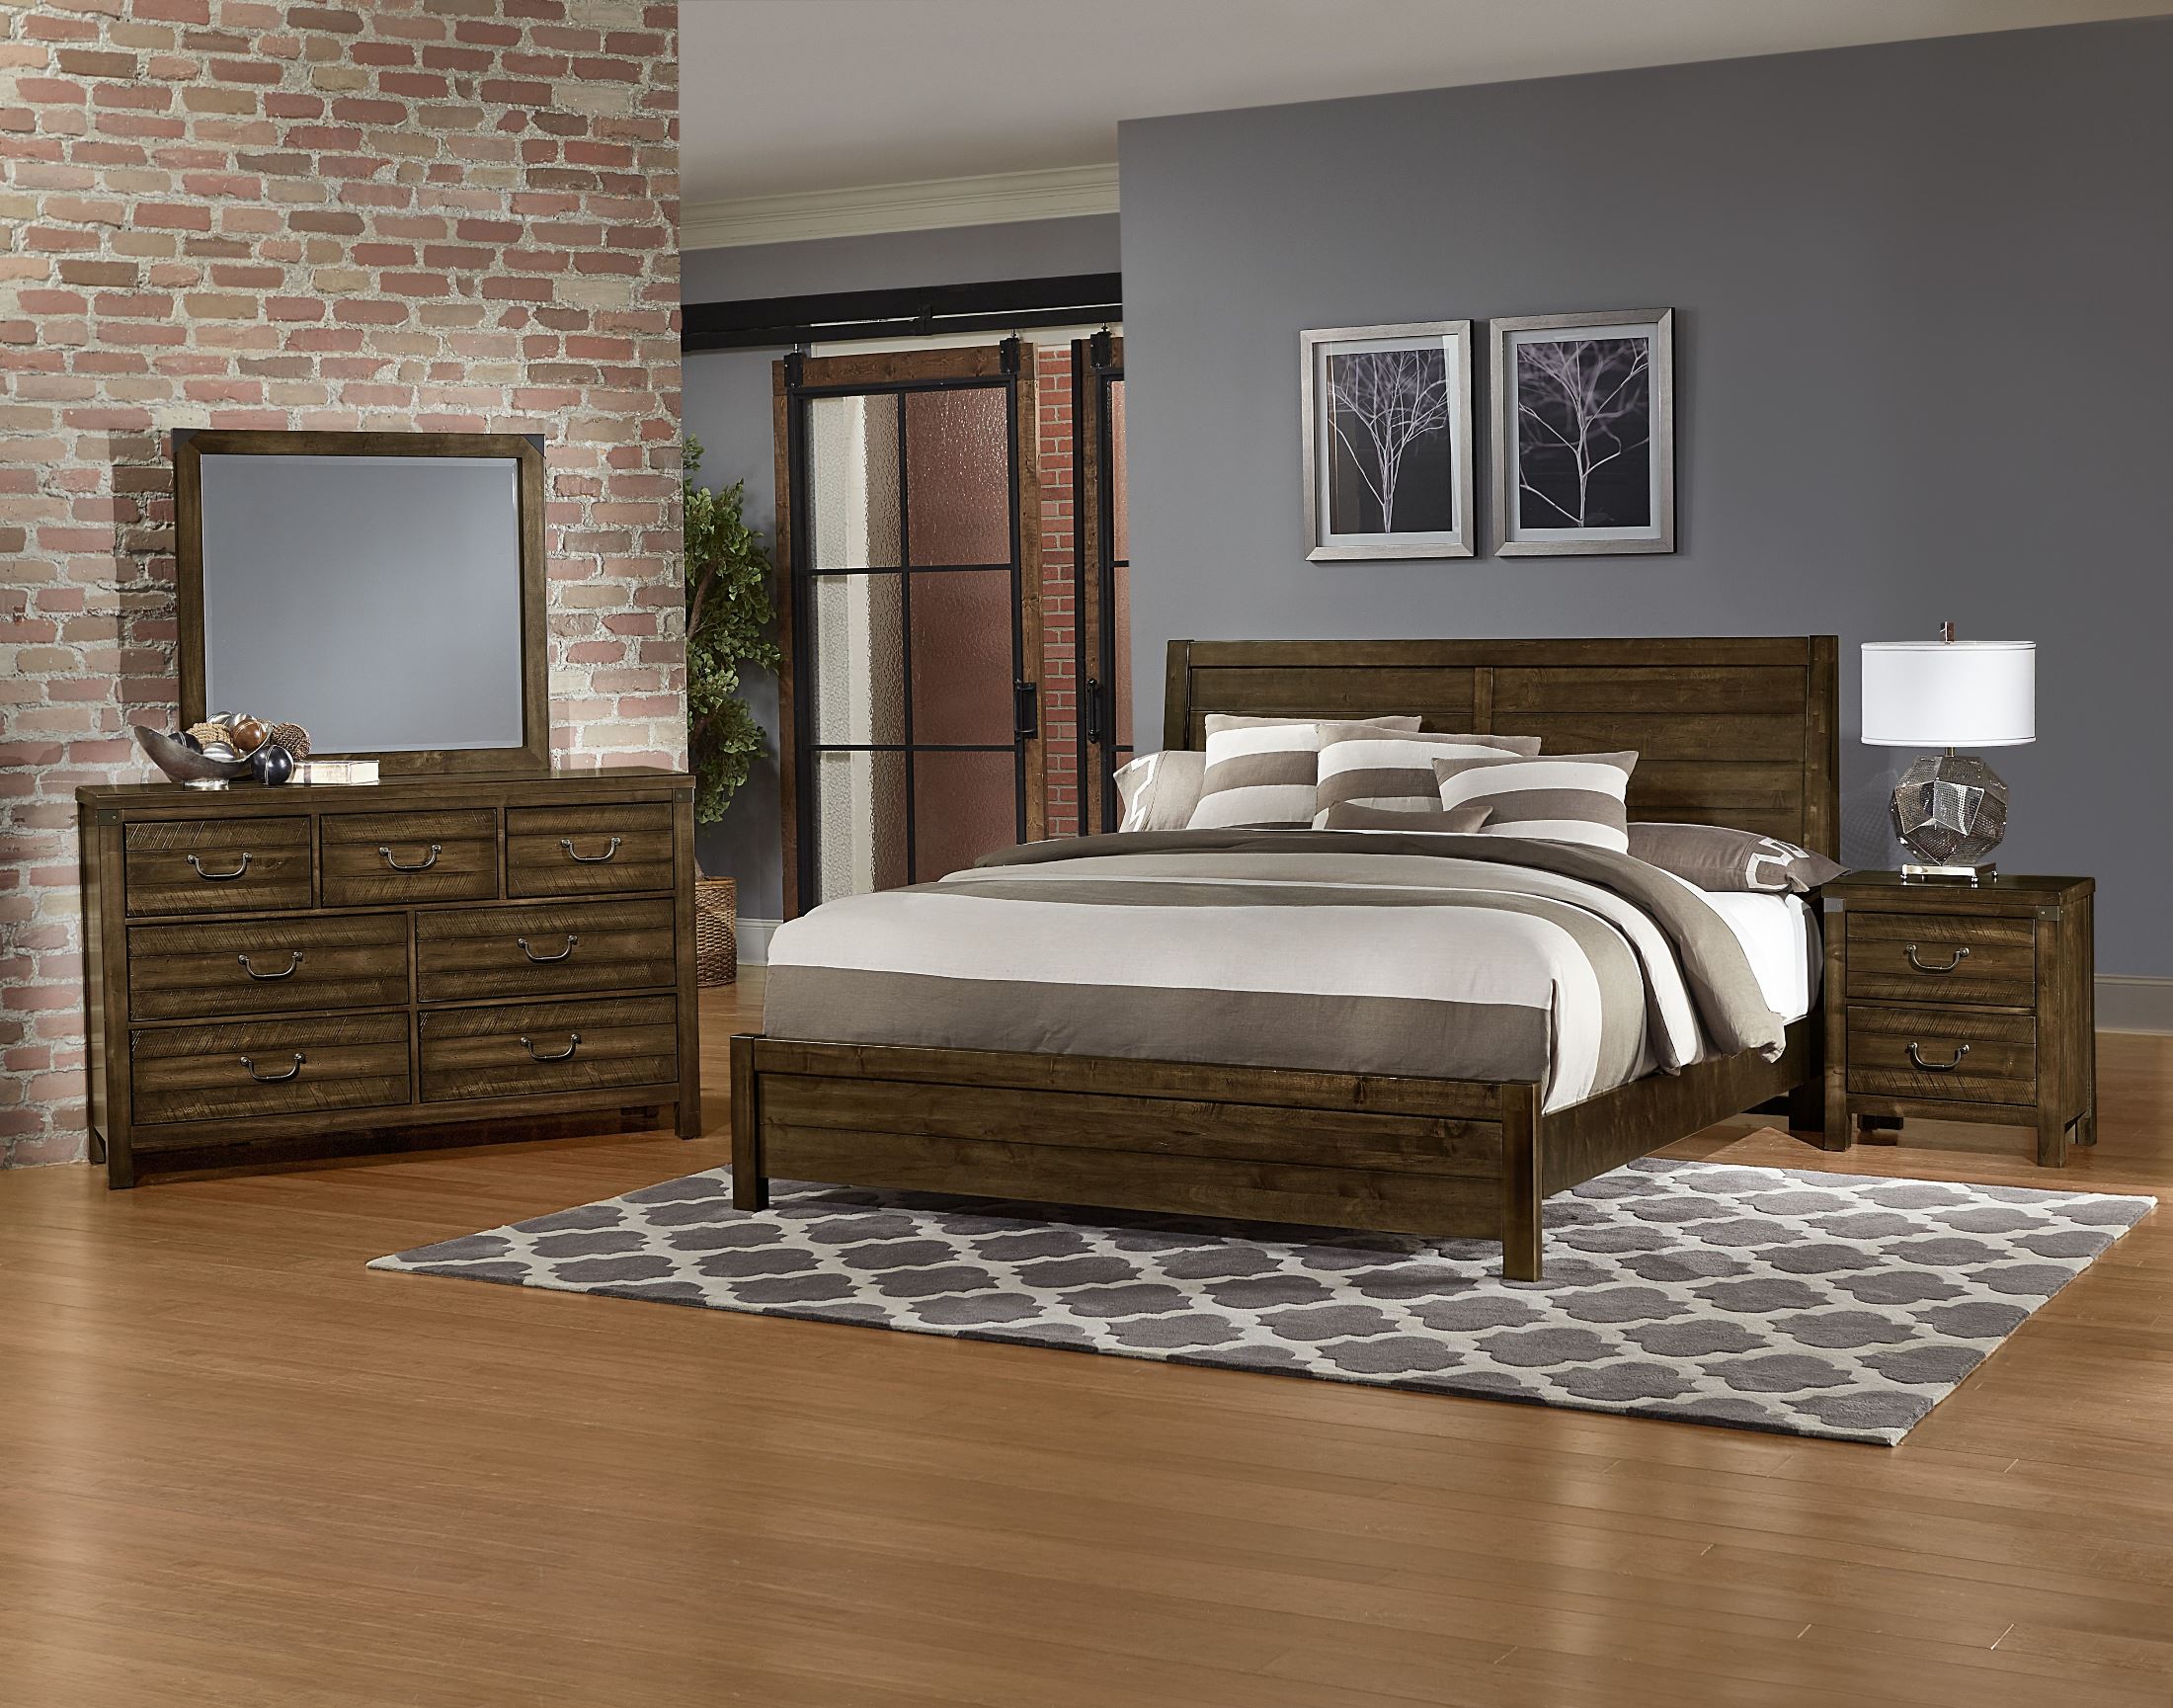 maple finish bedroom furniture